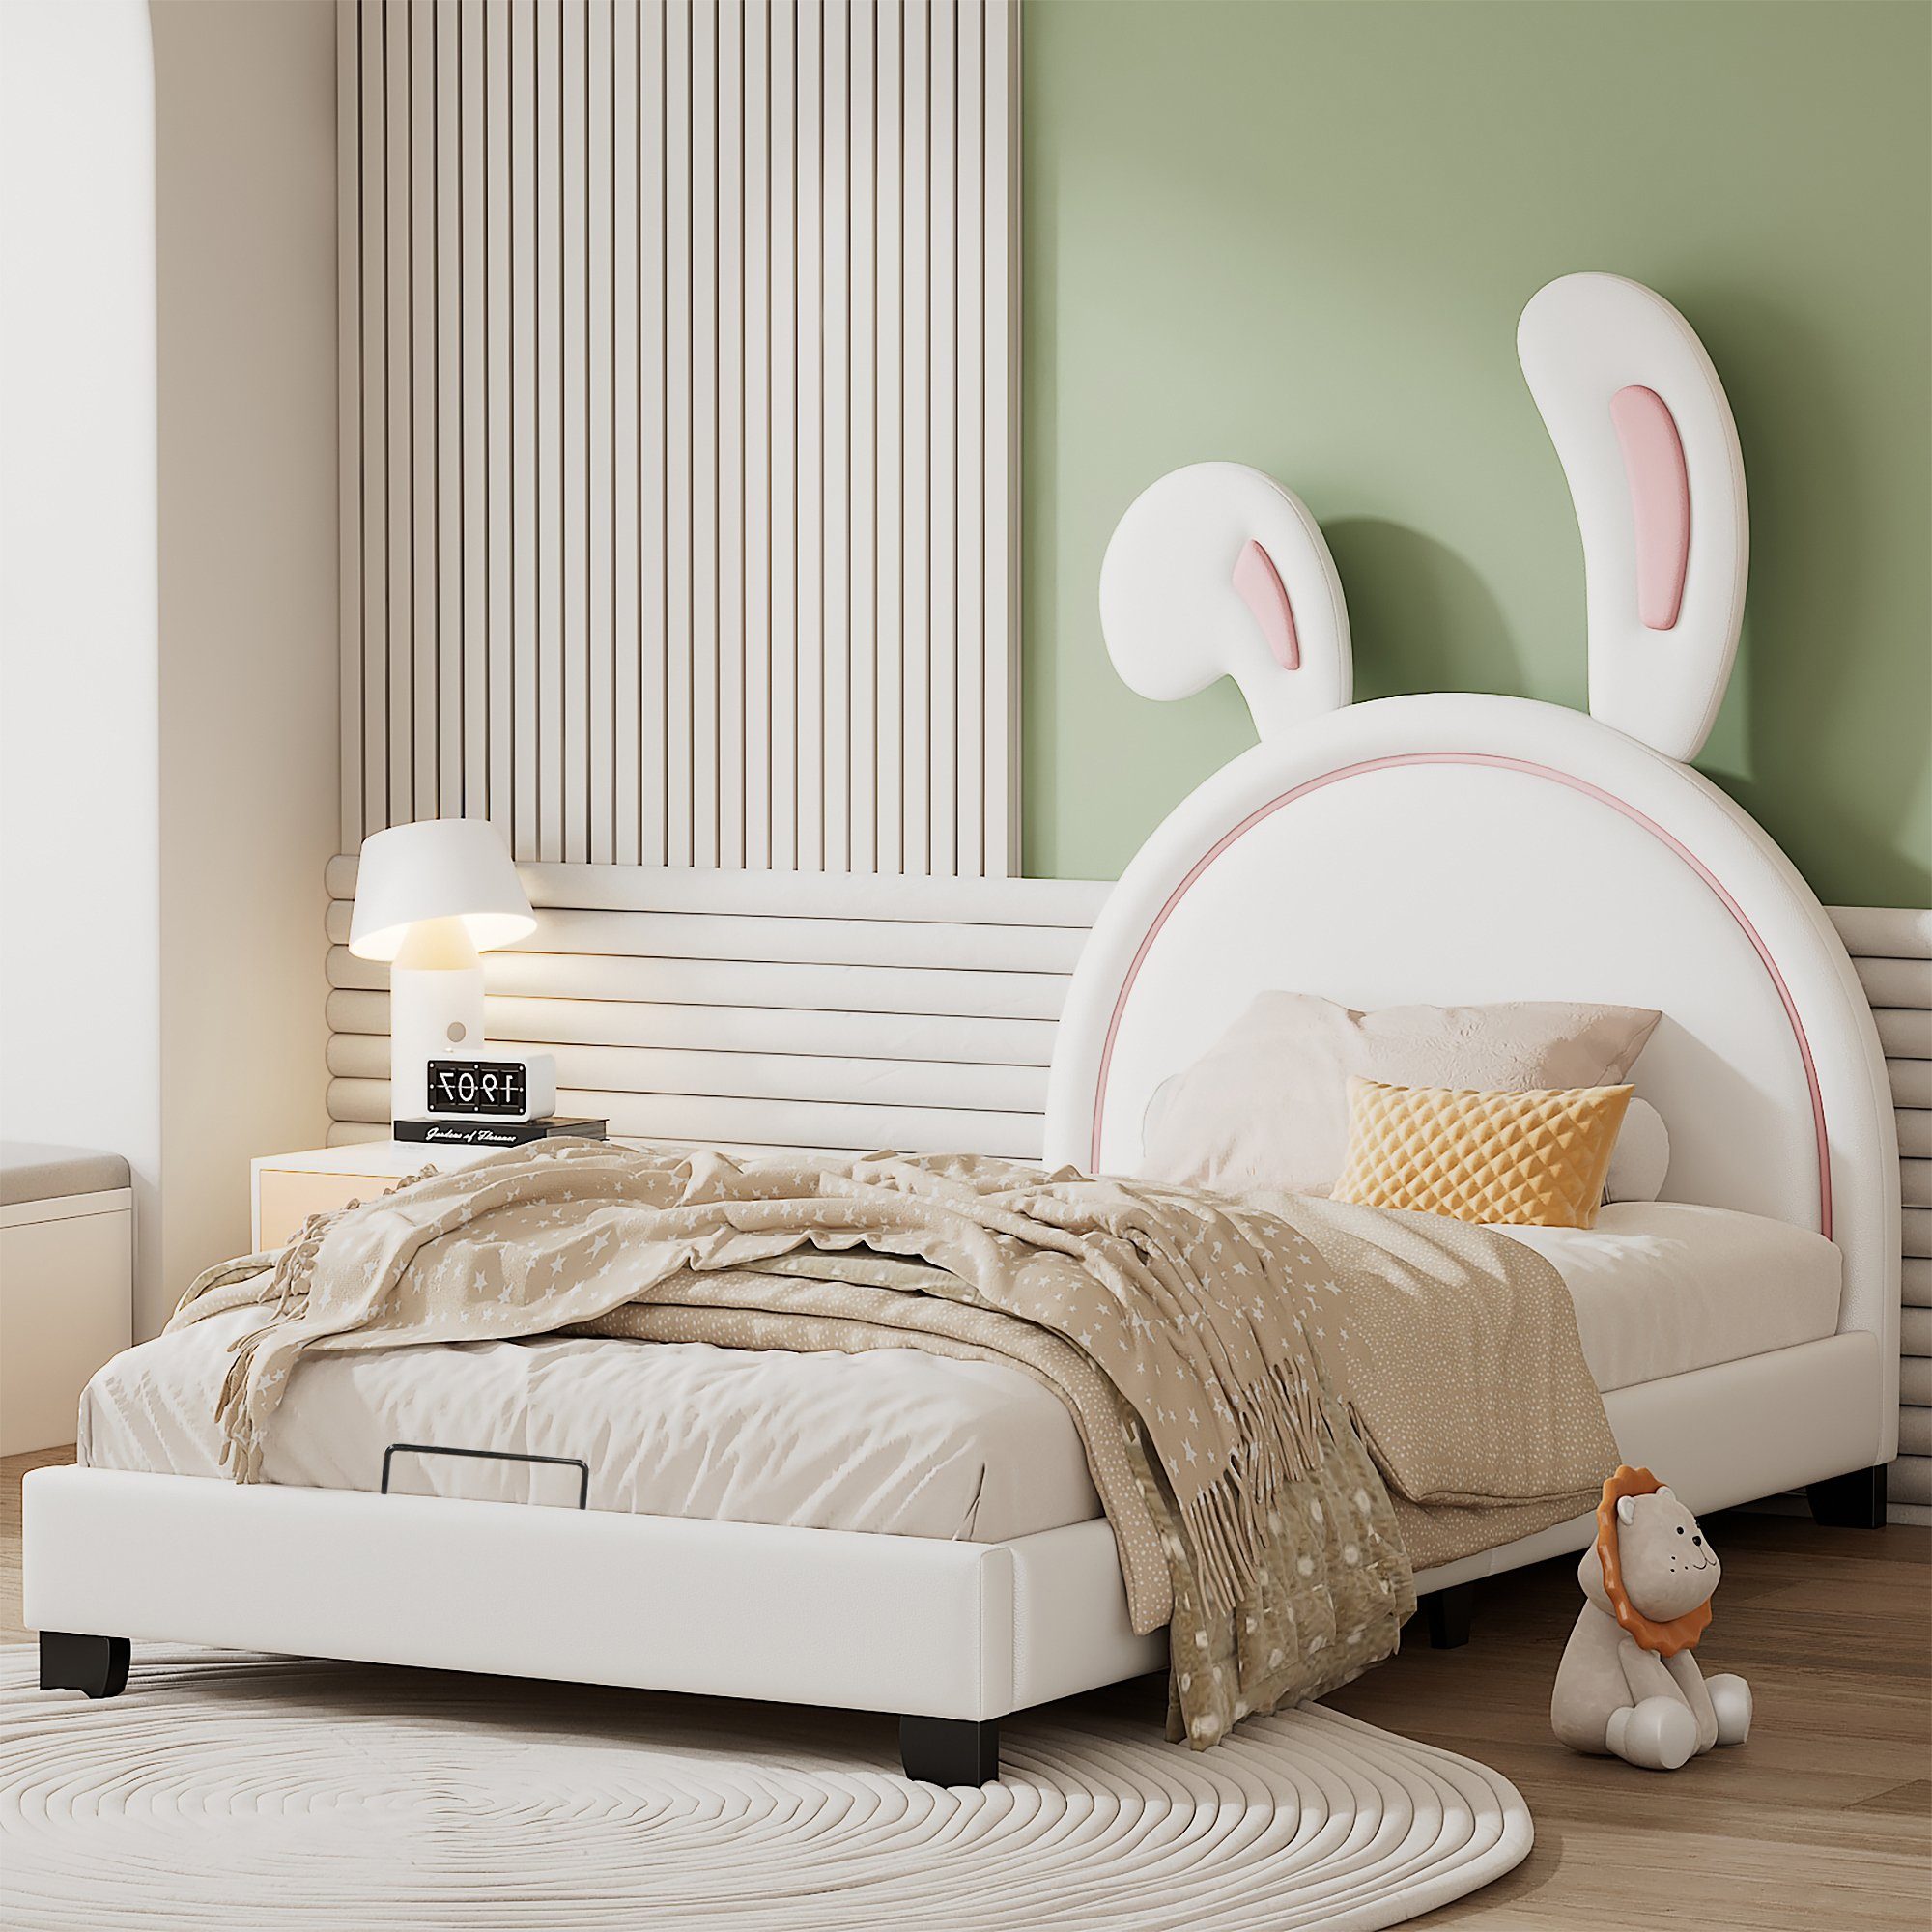 Flieks Polsterbett, Kinderbett Einzelbett in Hasenohrform Kunstleder 90x200cm weiß | Polsterbetten